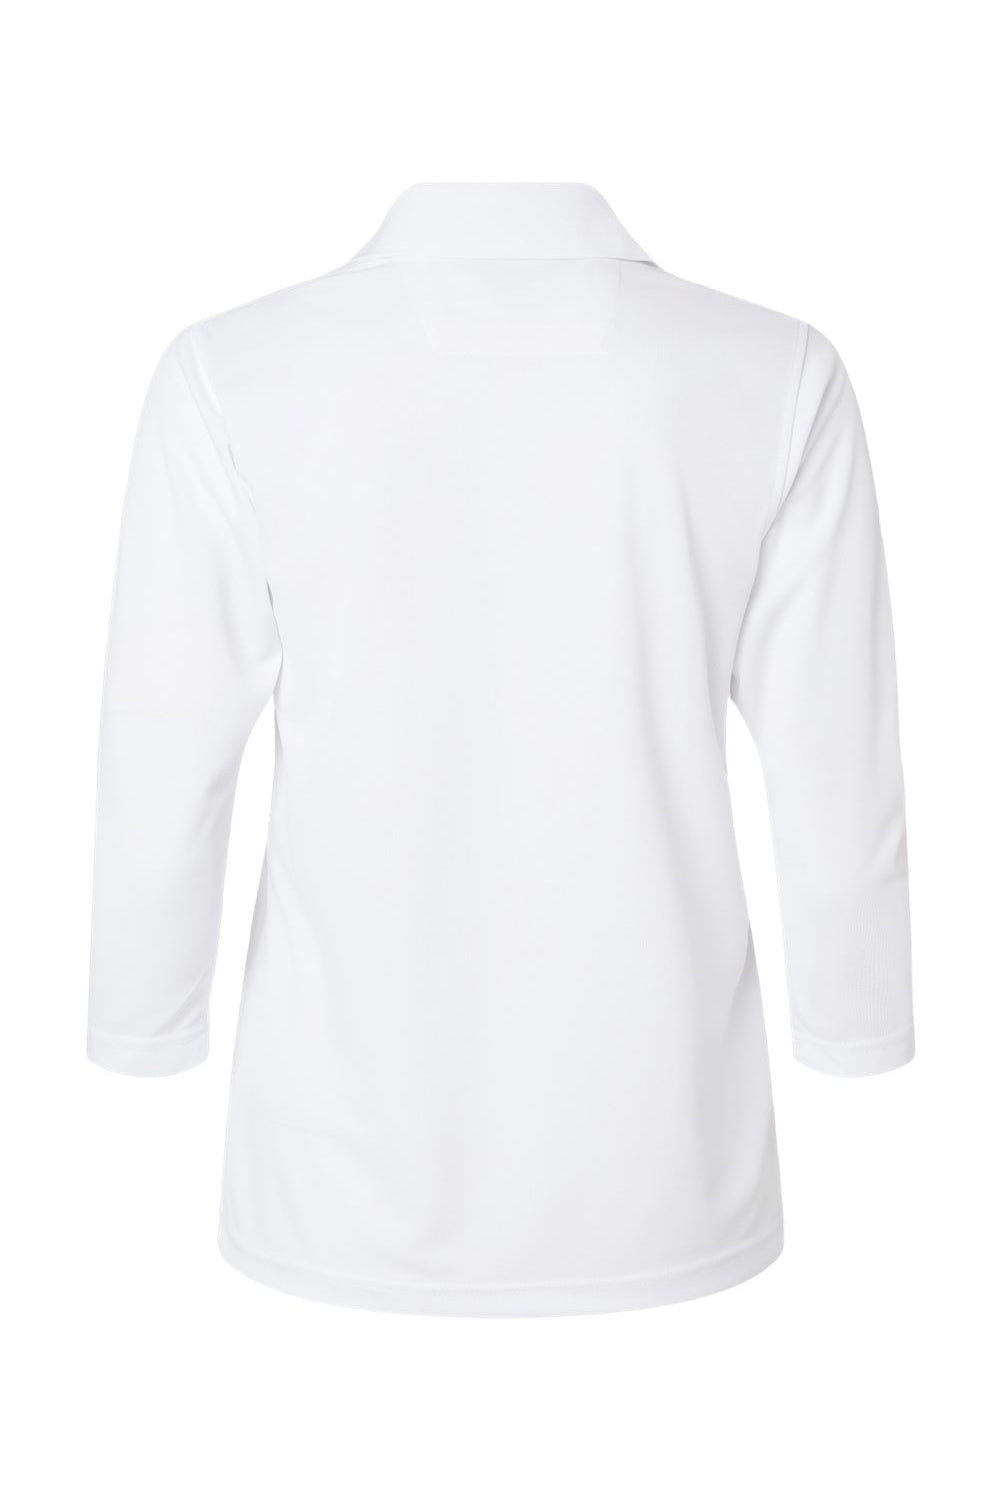 Paragon 120 Womens Lady Palm 3/4 Sleeve Polo Shirt White Flat Back